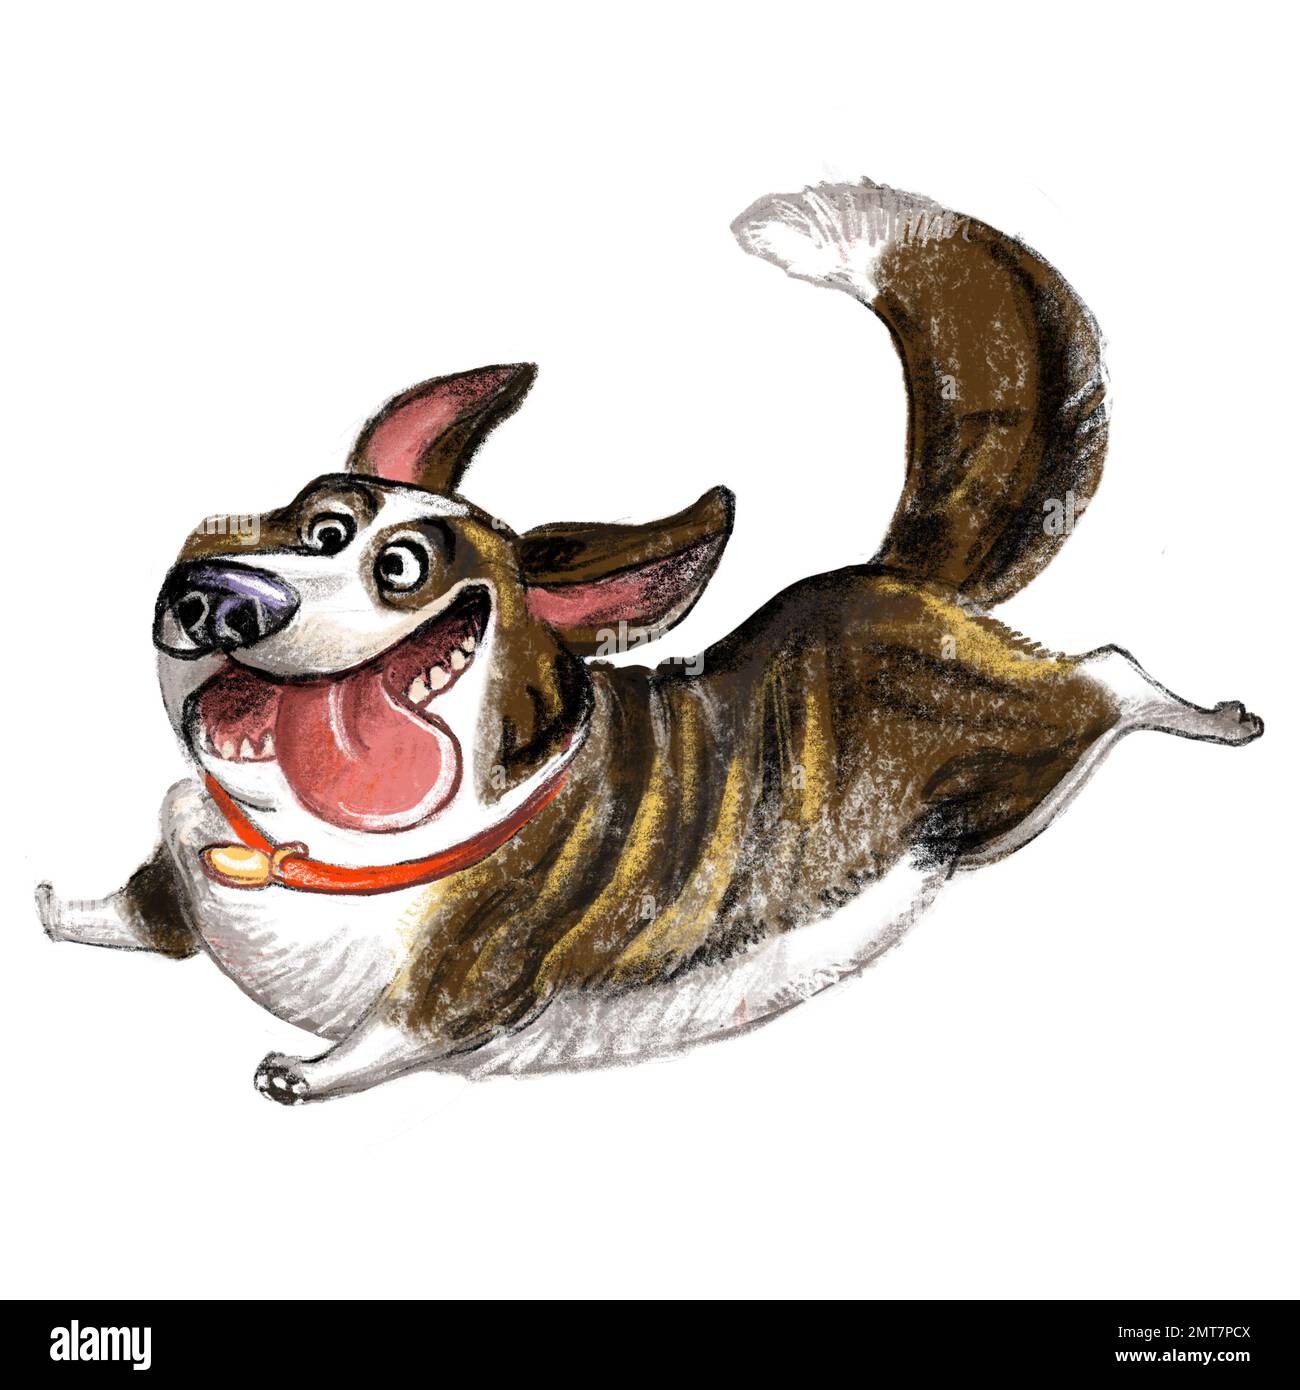 Cute funny cartoon dog character. Cardigan Welsh Corgi dog breed illustration isolatwd on white background. For print, design, sublimation, stickers, Stock Photo